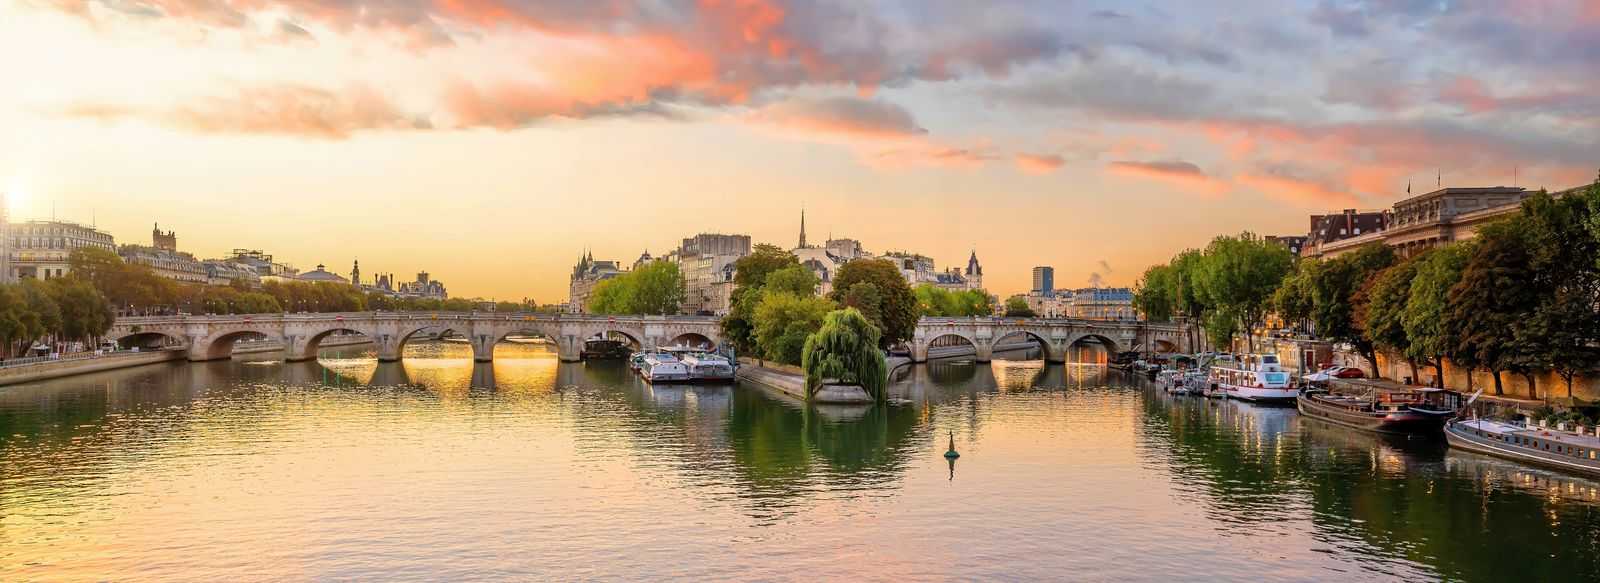 Seine River Cruise in September